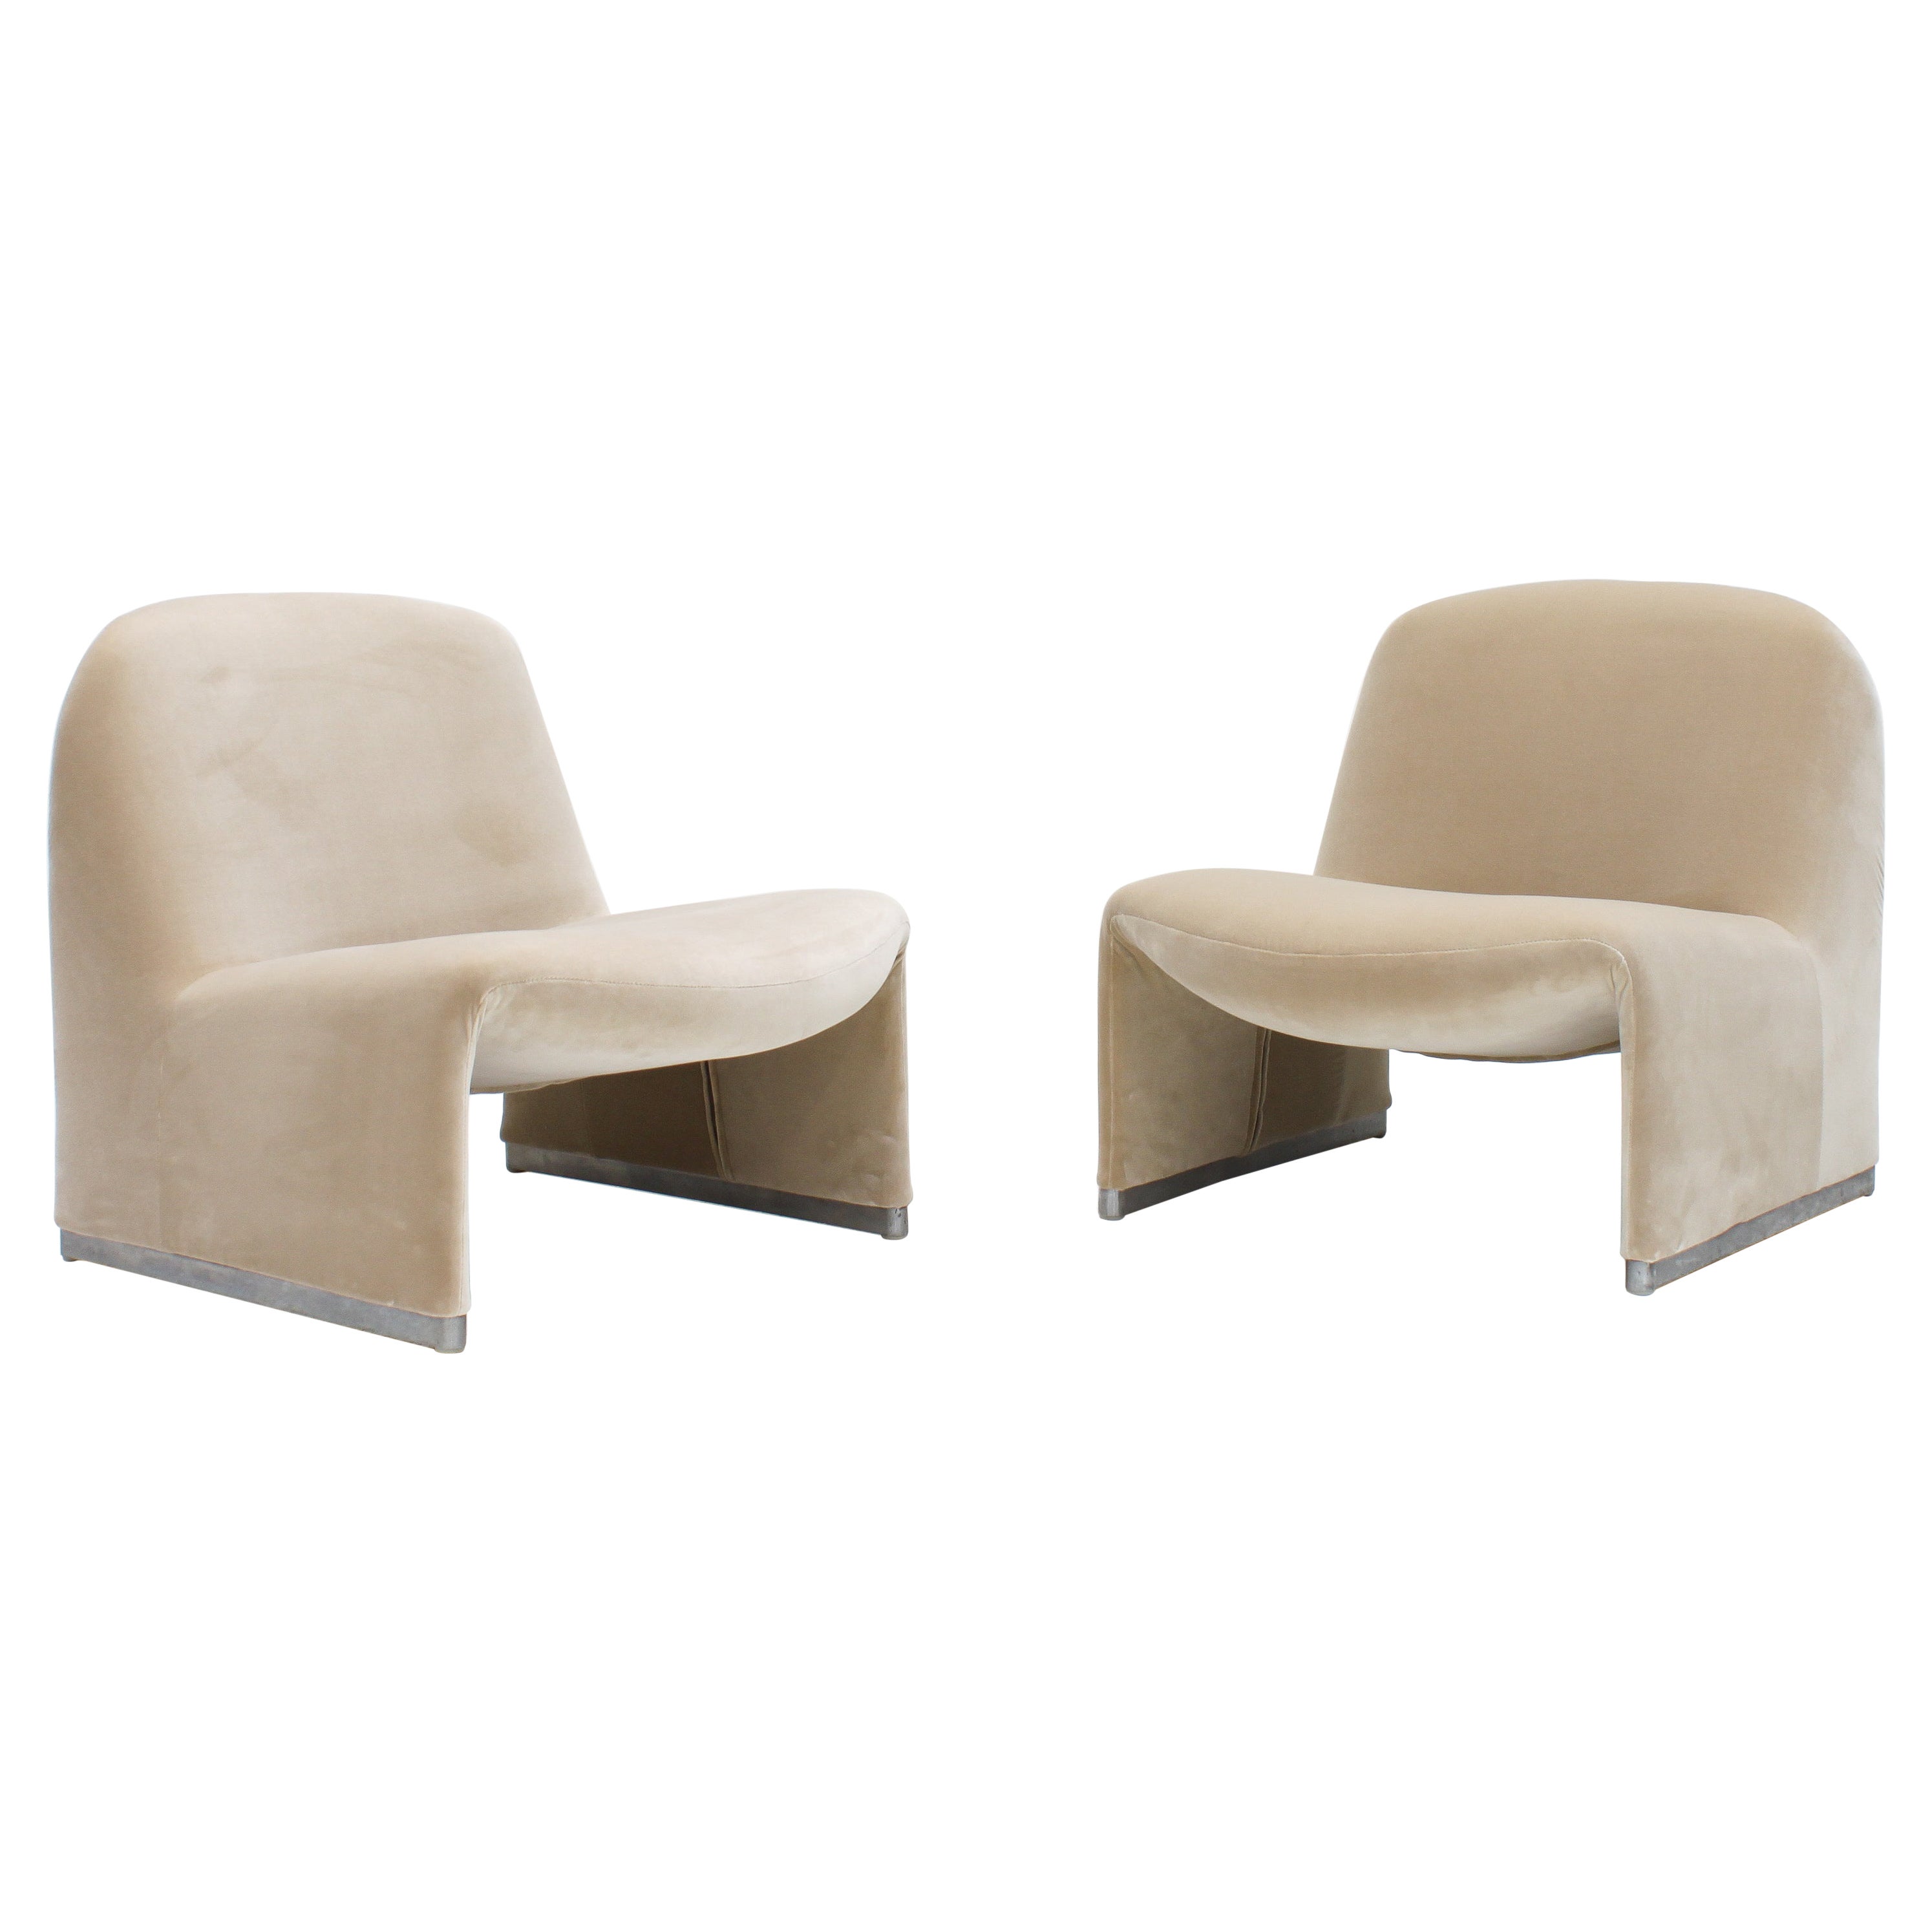 Giancarlo Piretti “Alky” Chairs in New Velvet, Artifort, 1970s - *Customizable*